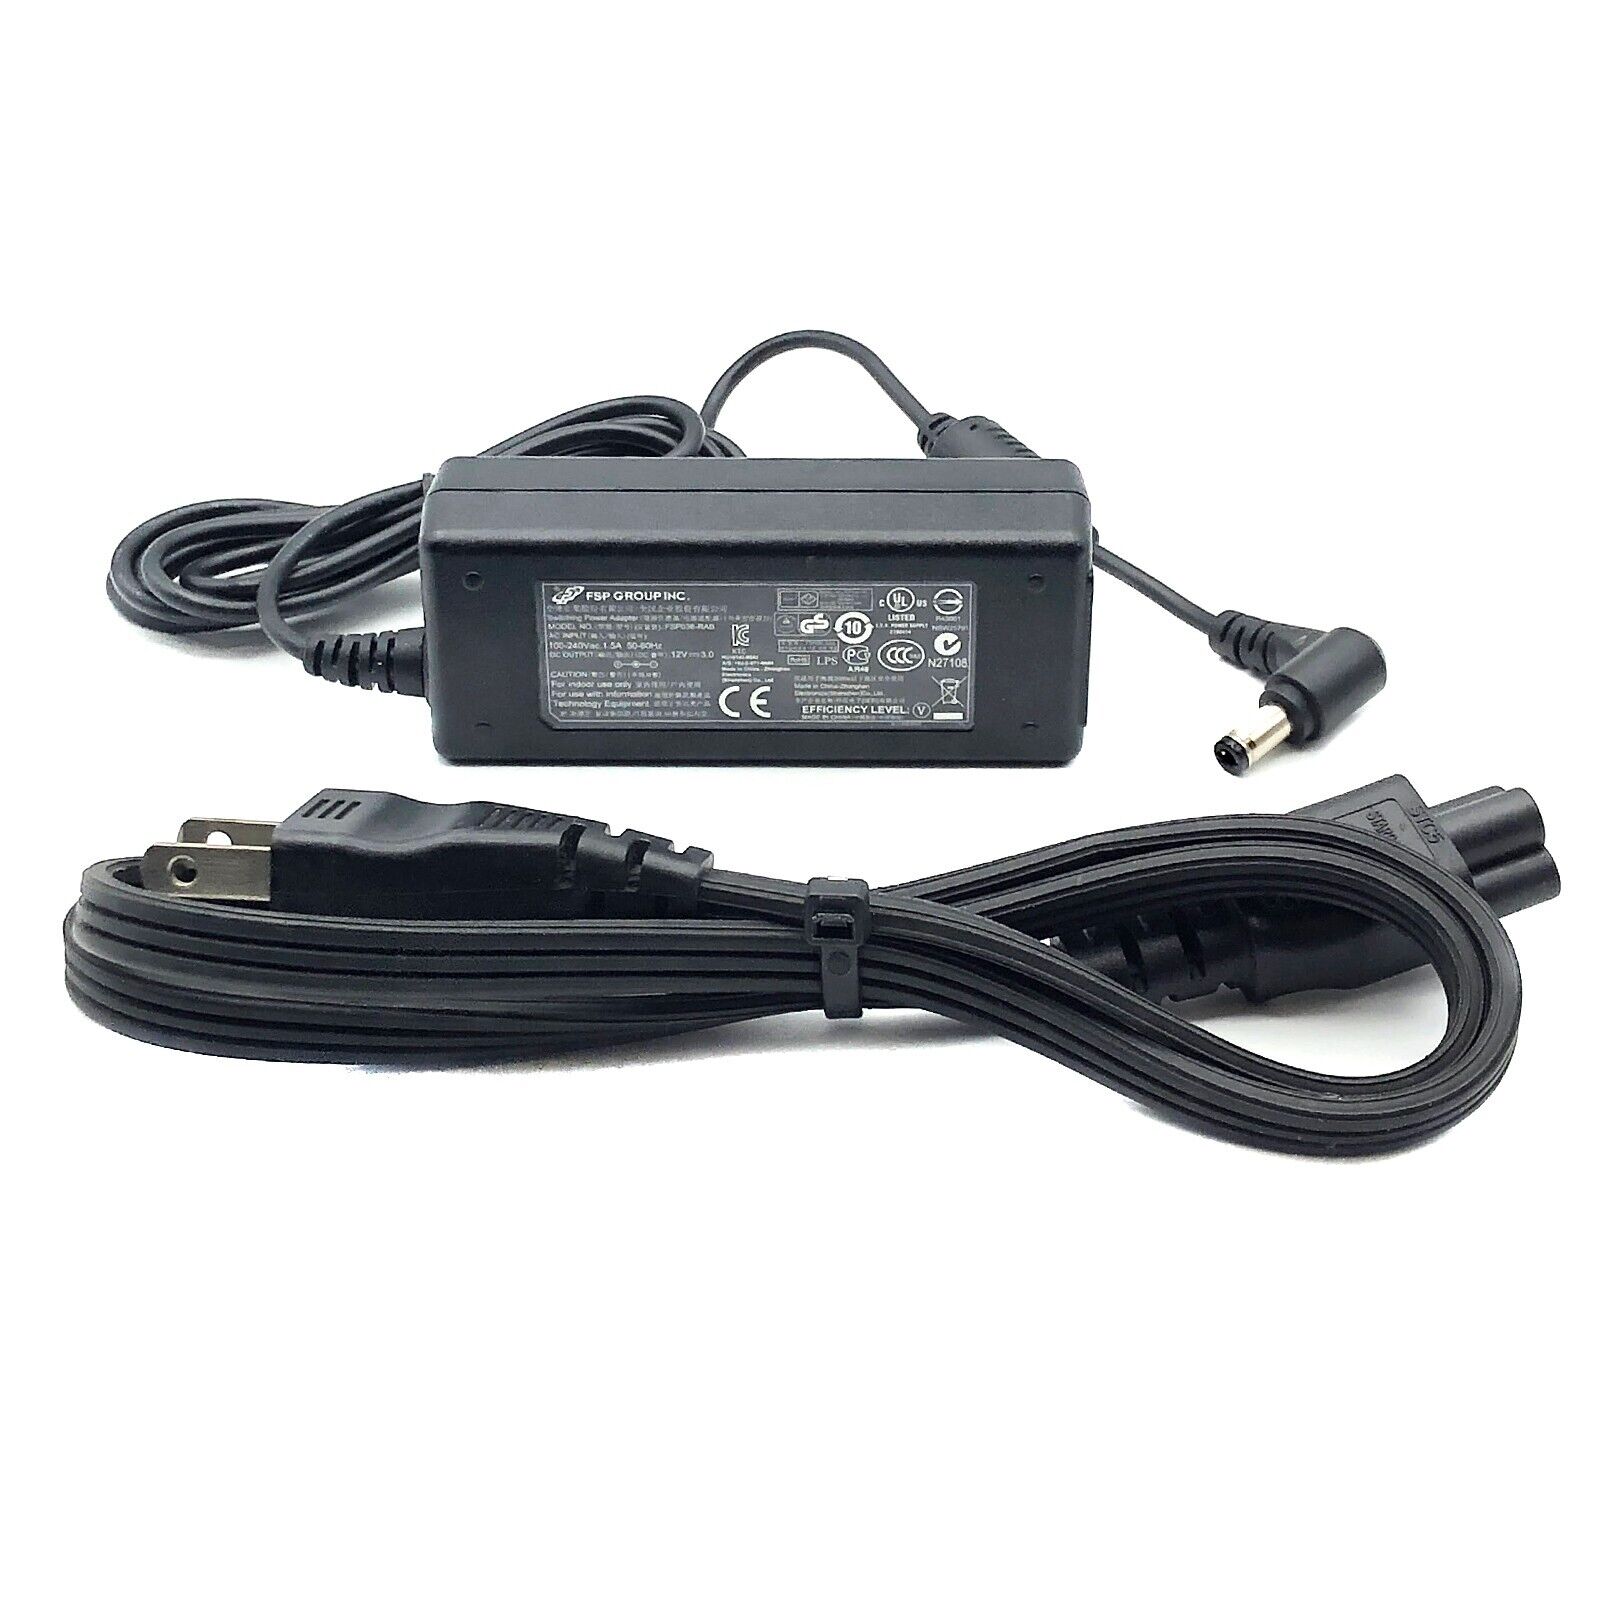 *Brand NEW*Genuine FSP 12V 3A AC Adapter for Lathem 100E Electronic Time Clock POWER Supply - Click Image to Close